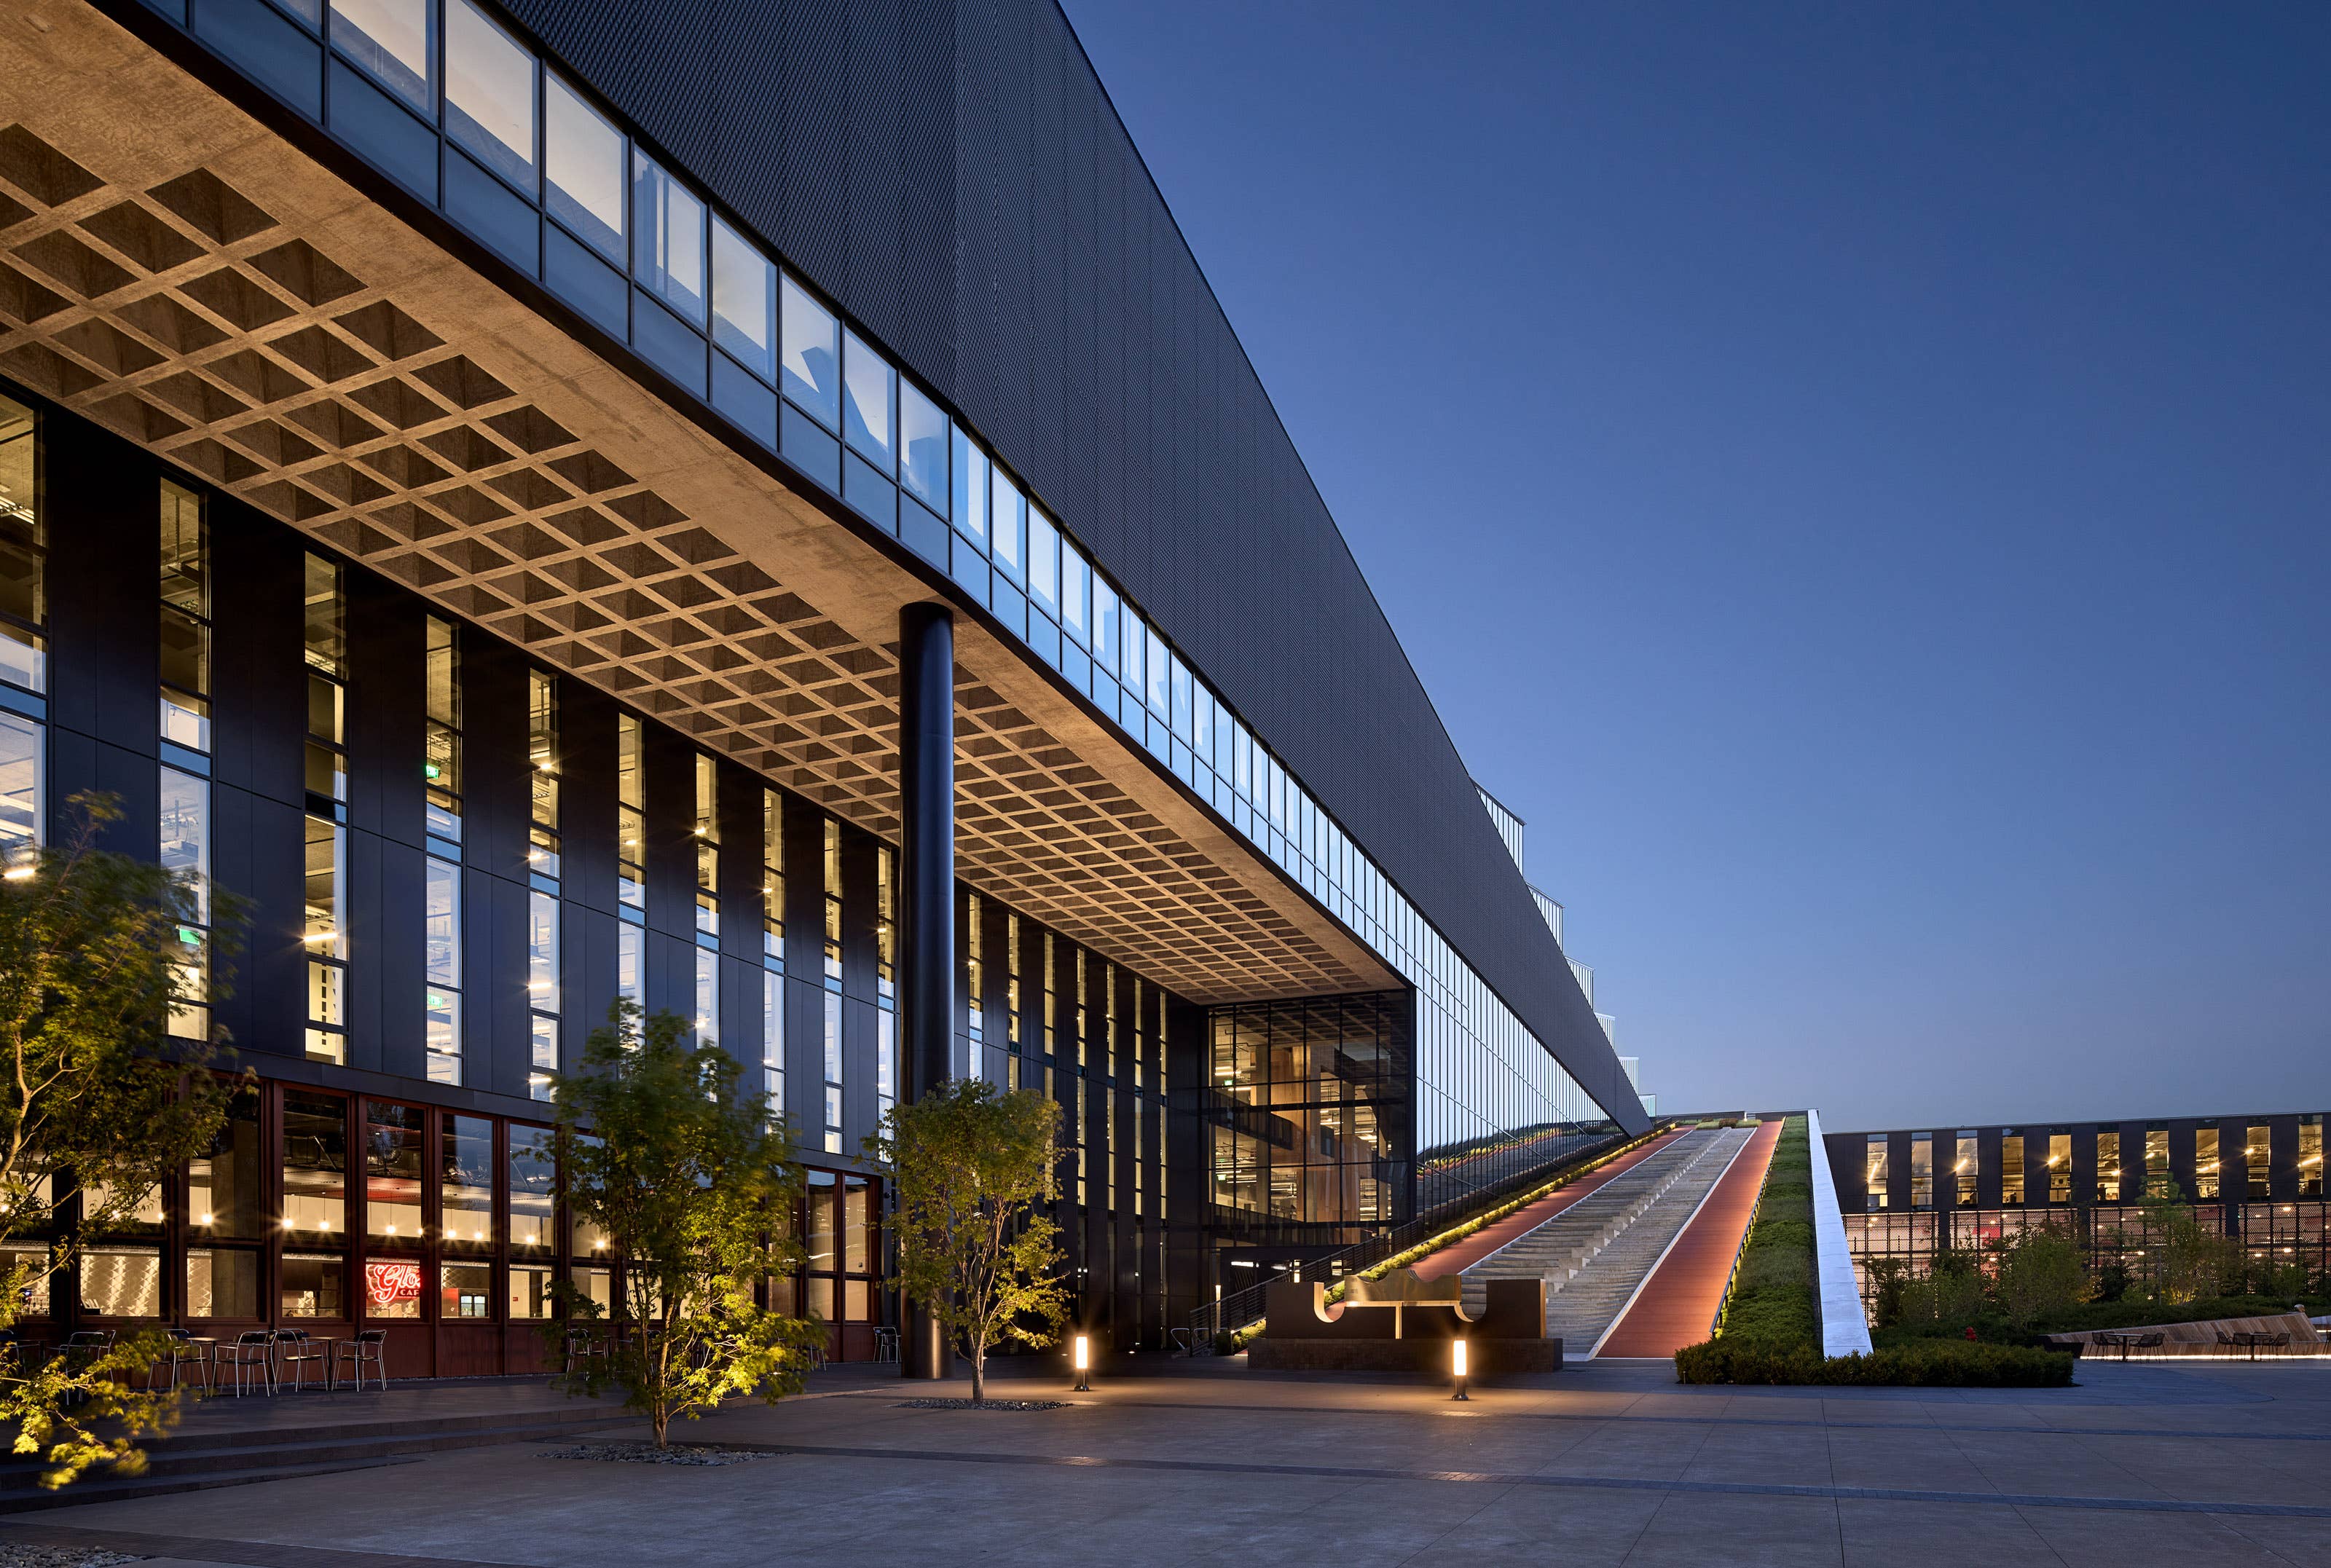 The LeBron James Innovation Center at Nike's world headquarters in Beaverton Oregon